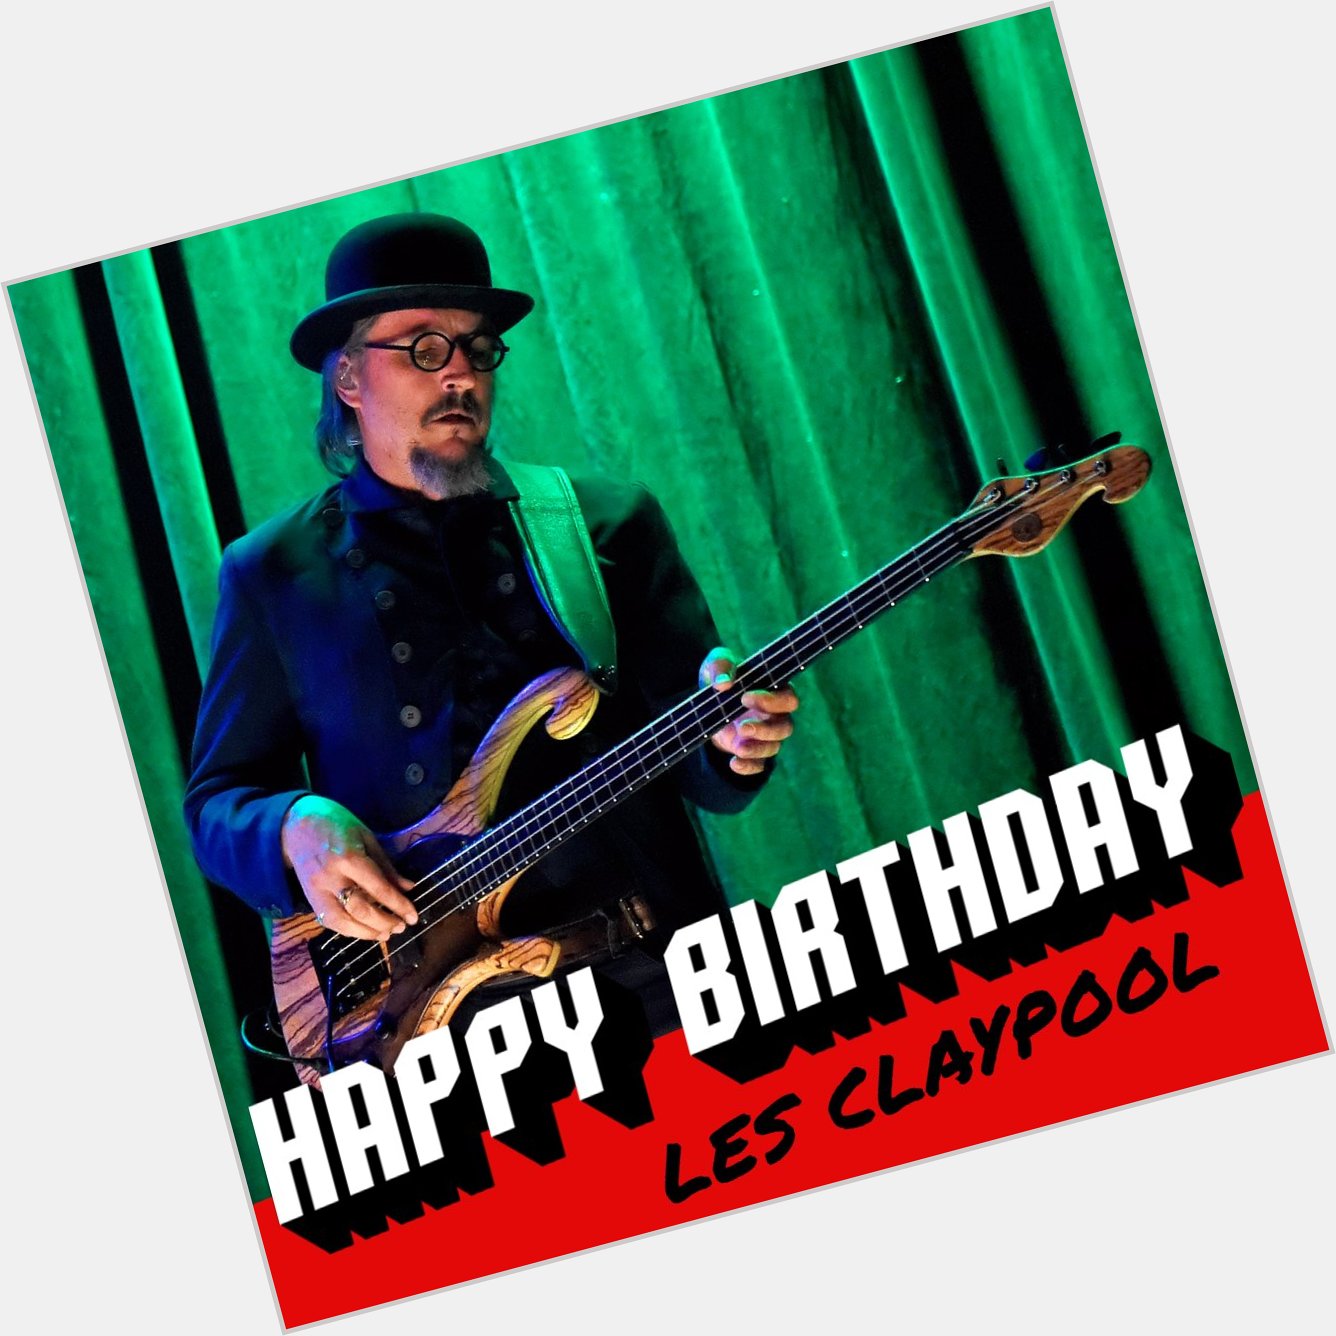 Happy 54th birthday to legend Les Claypool! 